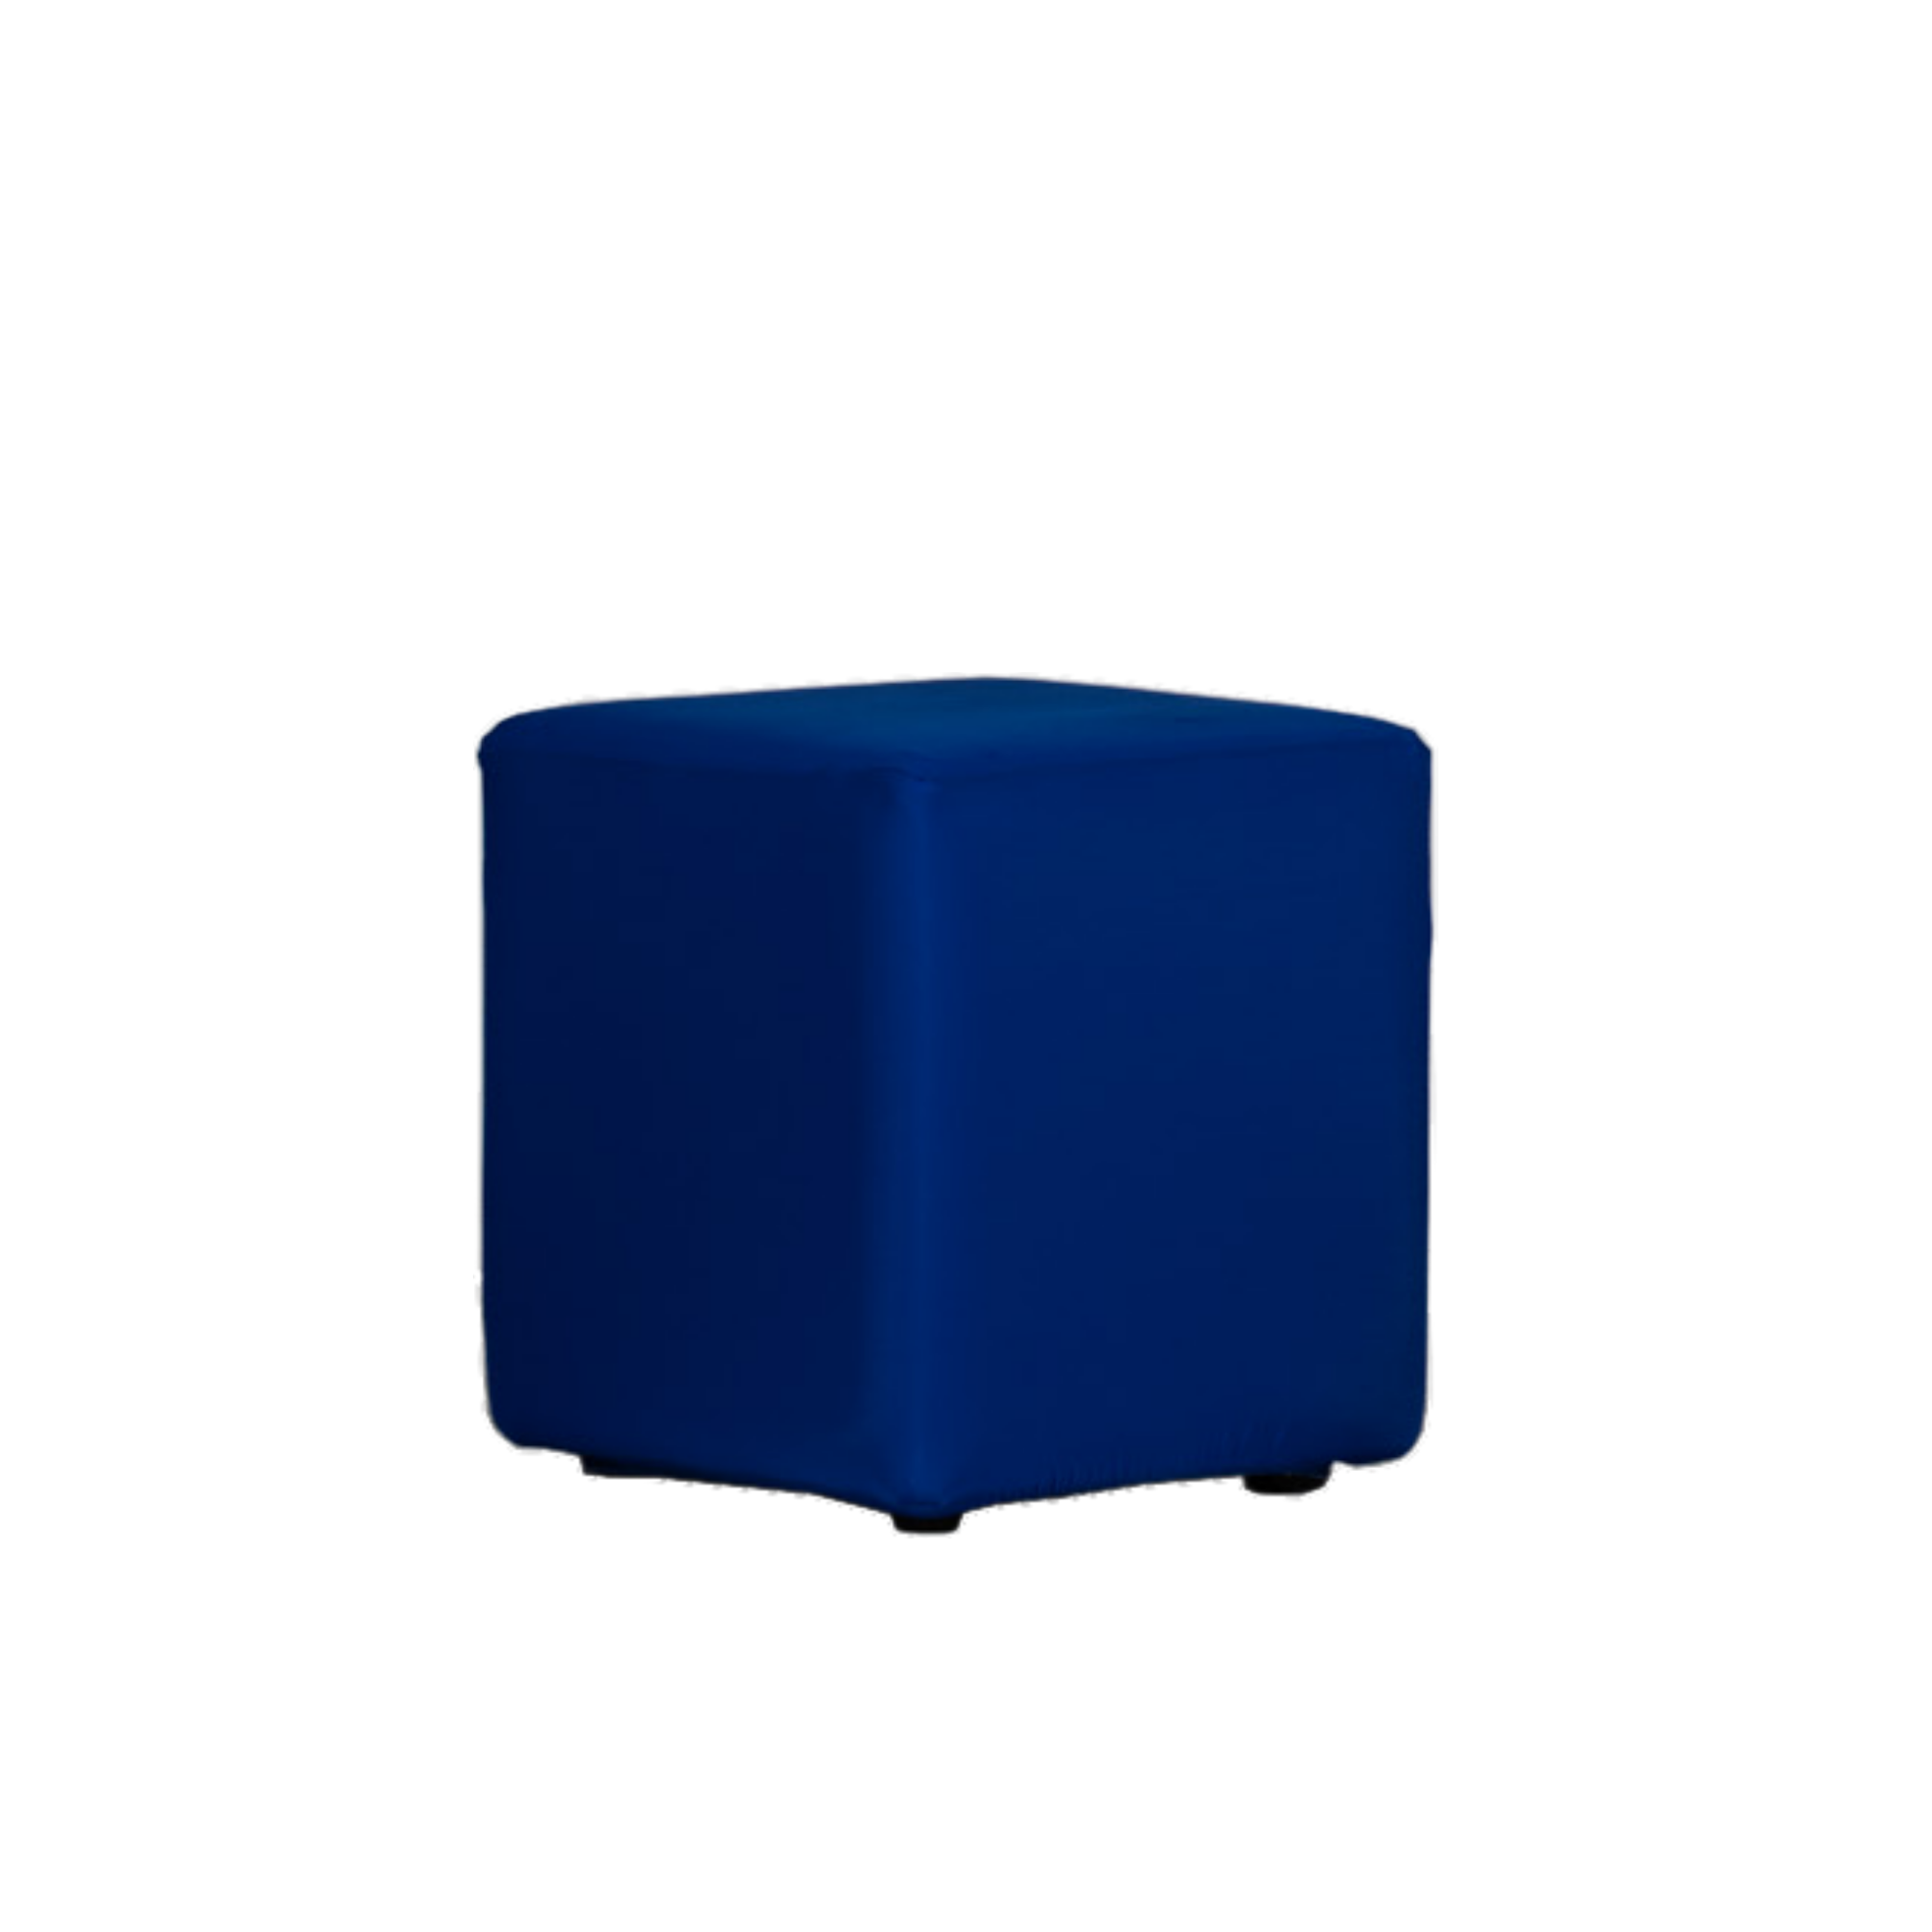 BLUE LYCRA COVER for pouf 40x40 cm